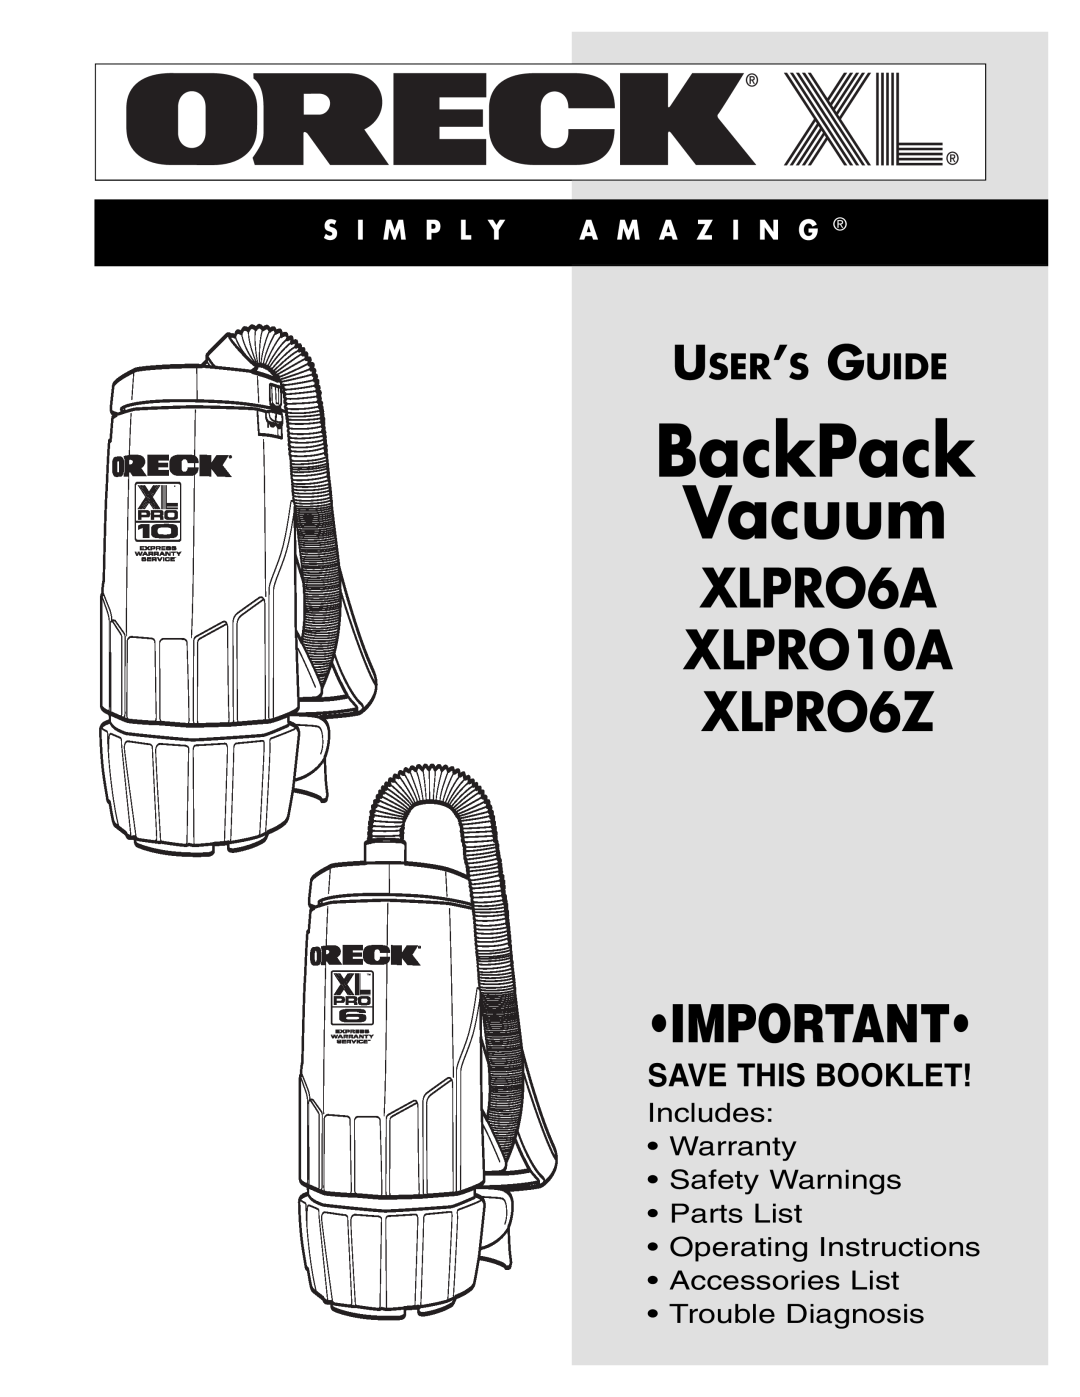 Oreck warranty BackPack Vacuum, XLPRO6A XLPRO10A XLPRO6Z, User’S Guide, Save This Booklet, S I M P L Y A M A Z I N G 